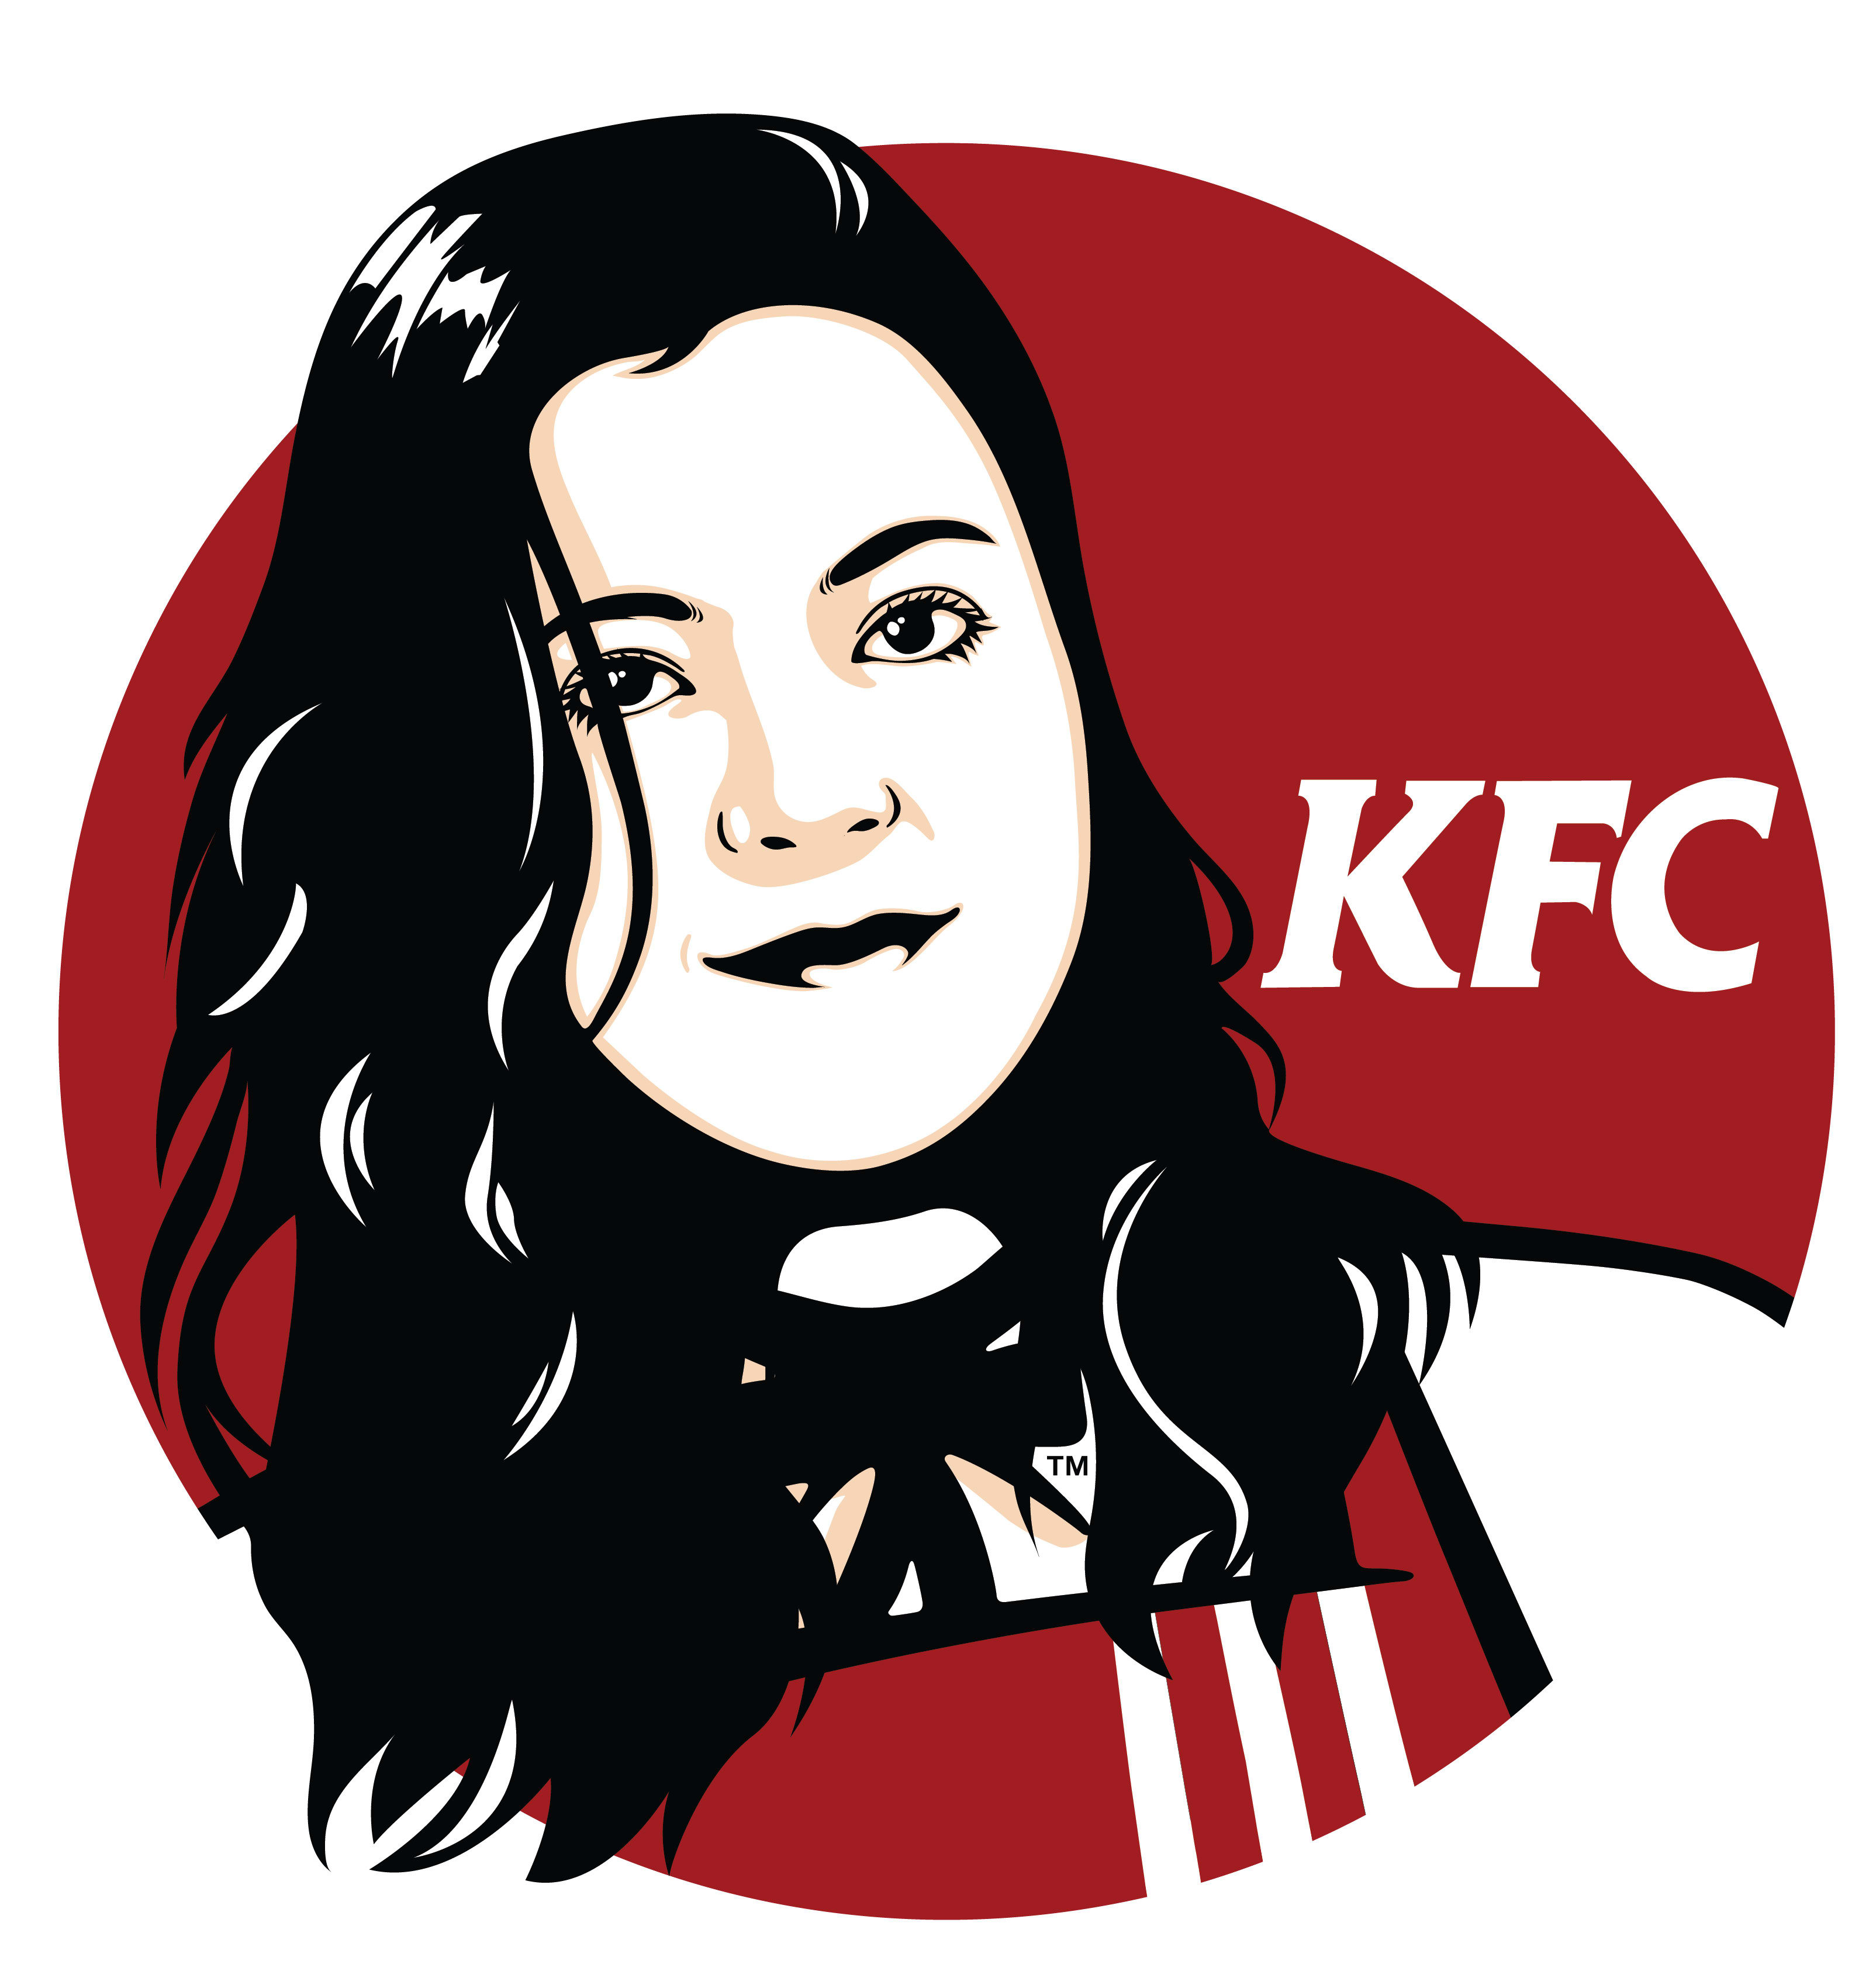 Draw your portrait like kfc logo, funny gift illustration by Redwart |  Fiverr